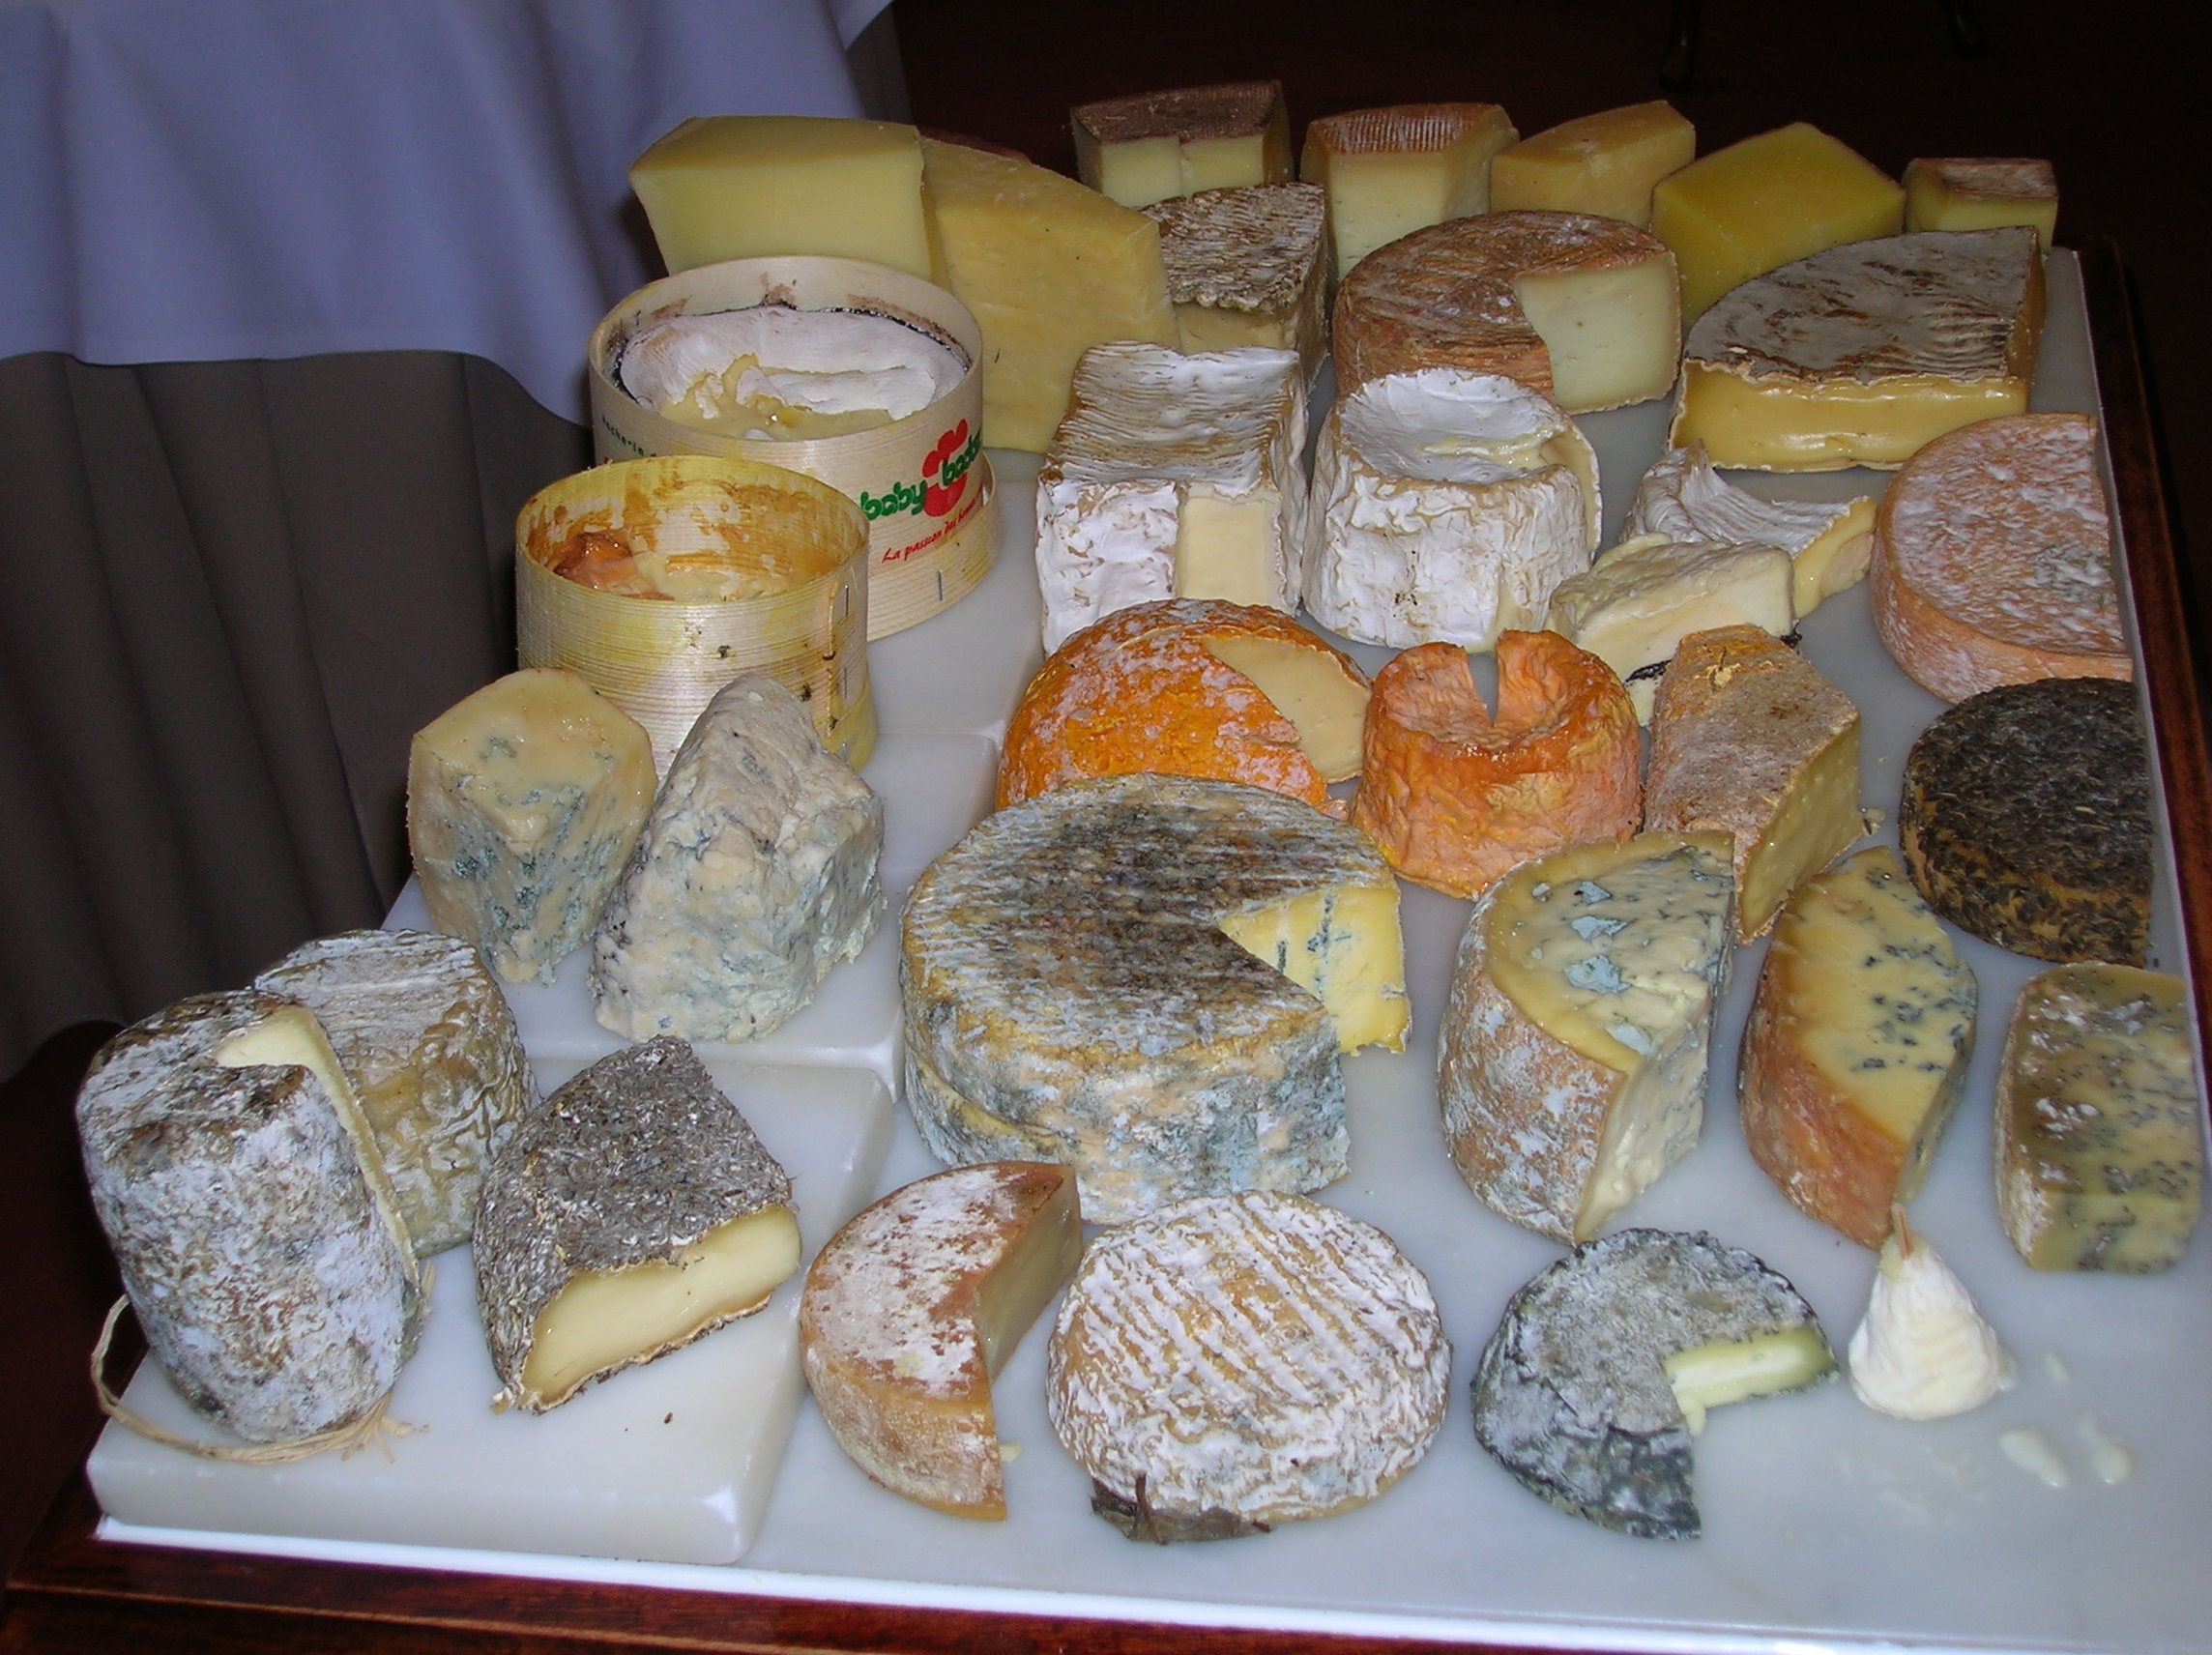 https://commons.wikimedia.org/wiki/File:Cheese_Cart_in_Gordon_Ramsay_restaurant.JPG